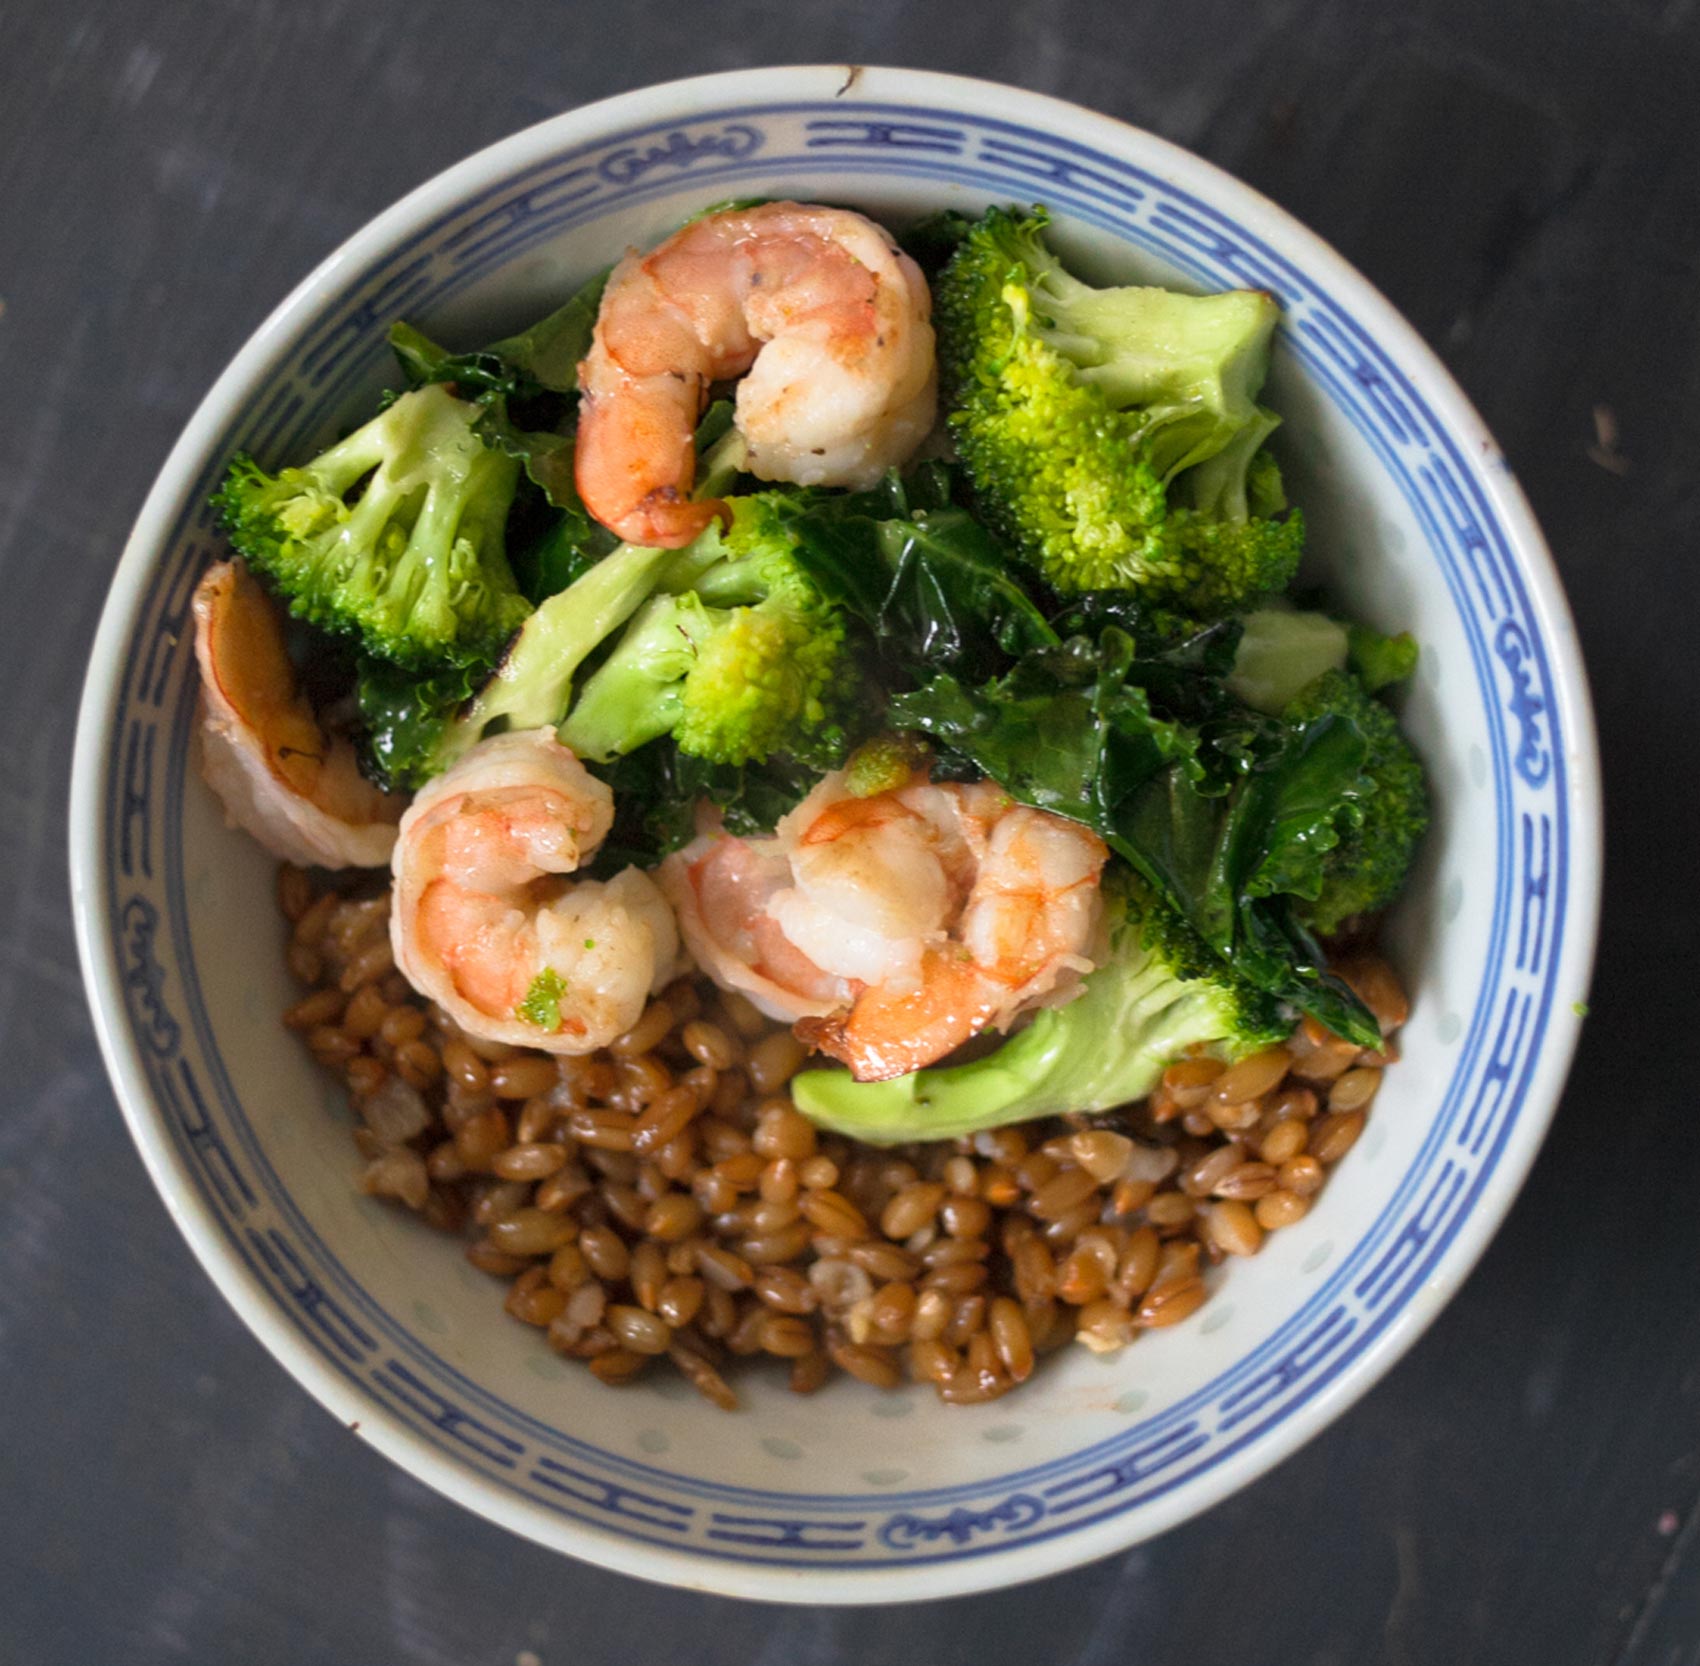 Shrimp + Broccoli + Kale + Wheat Berries